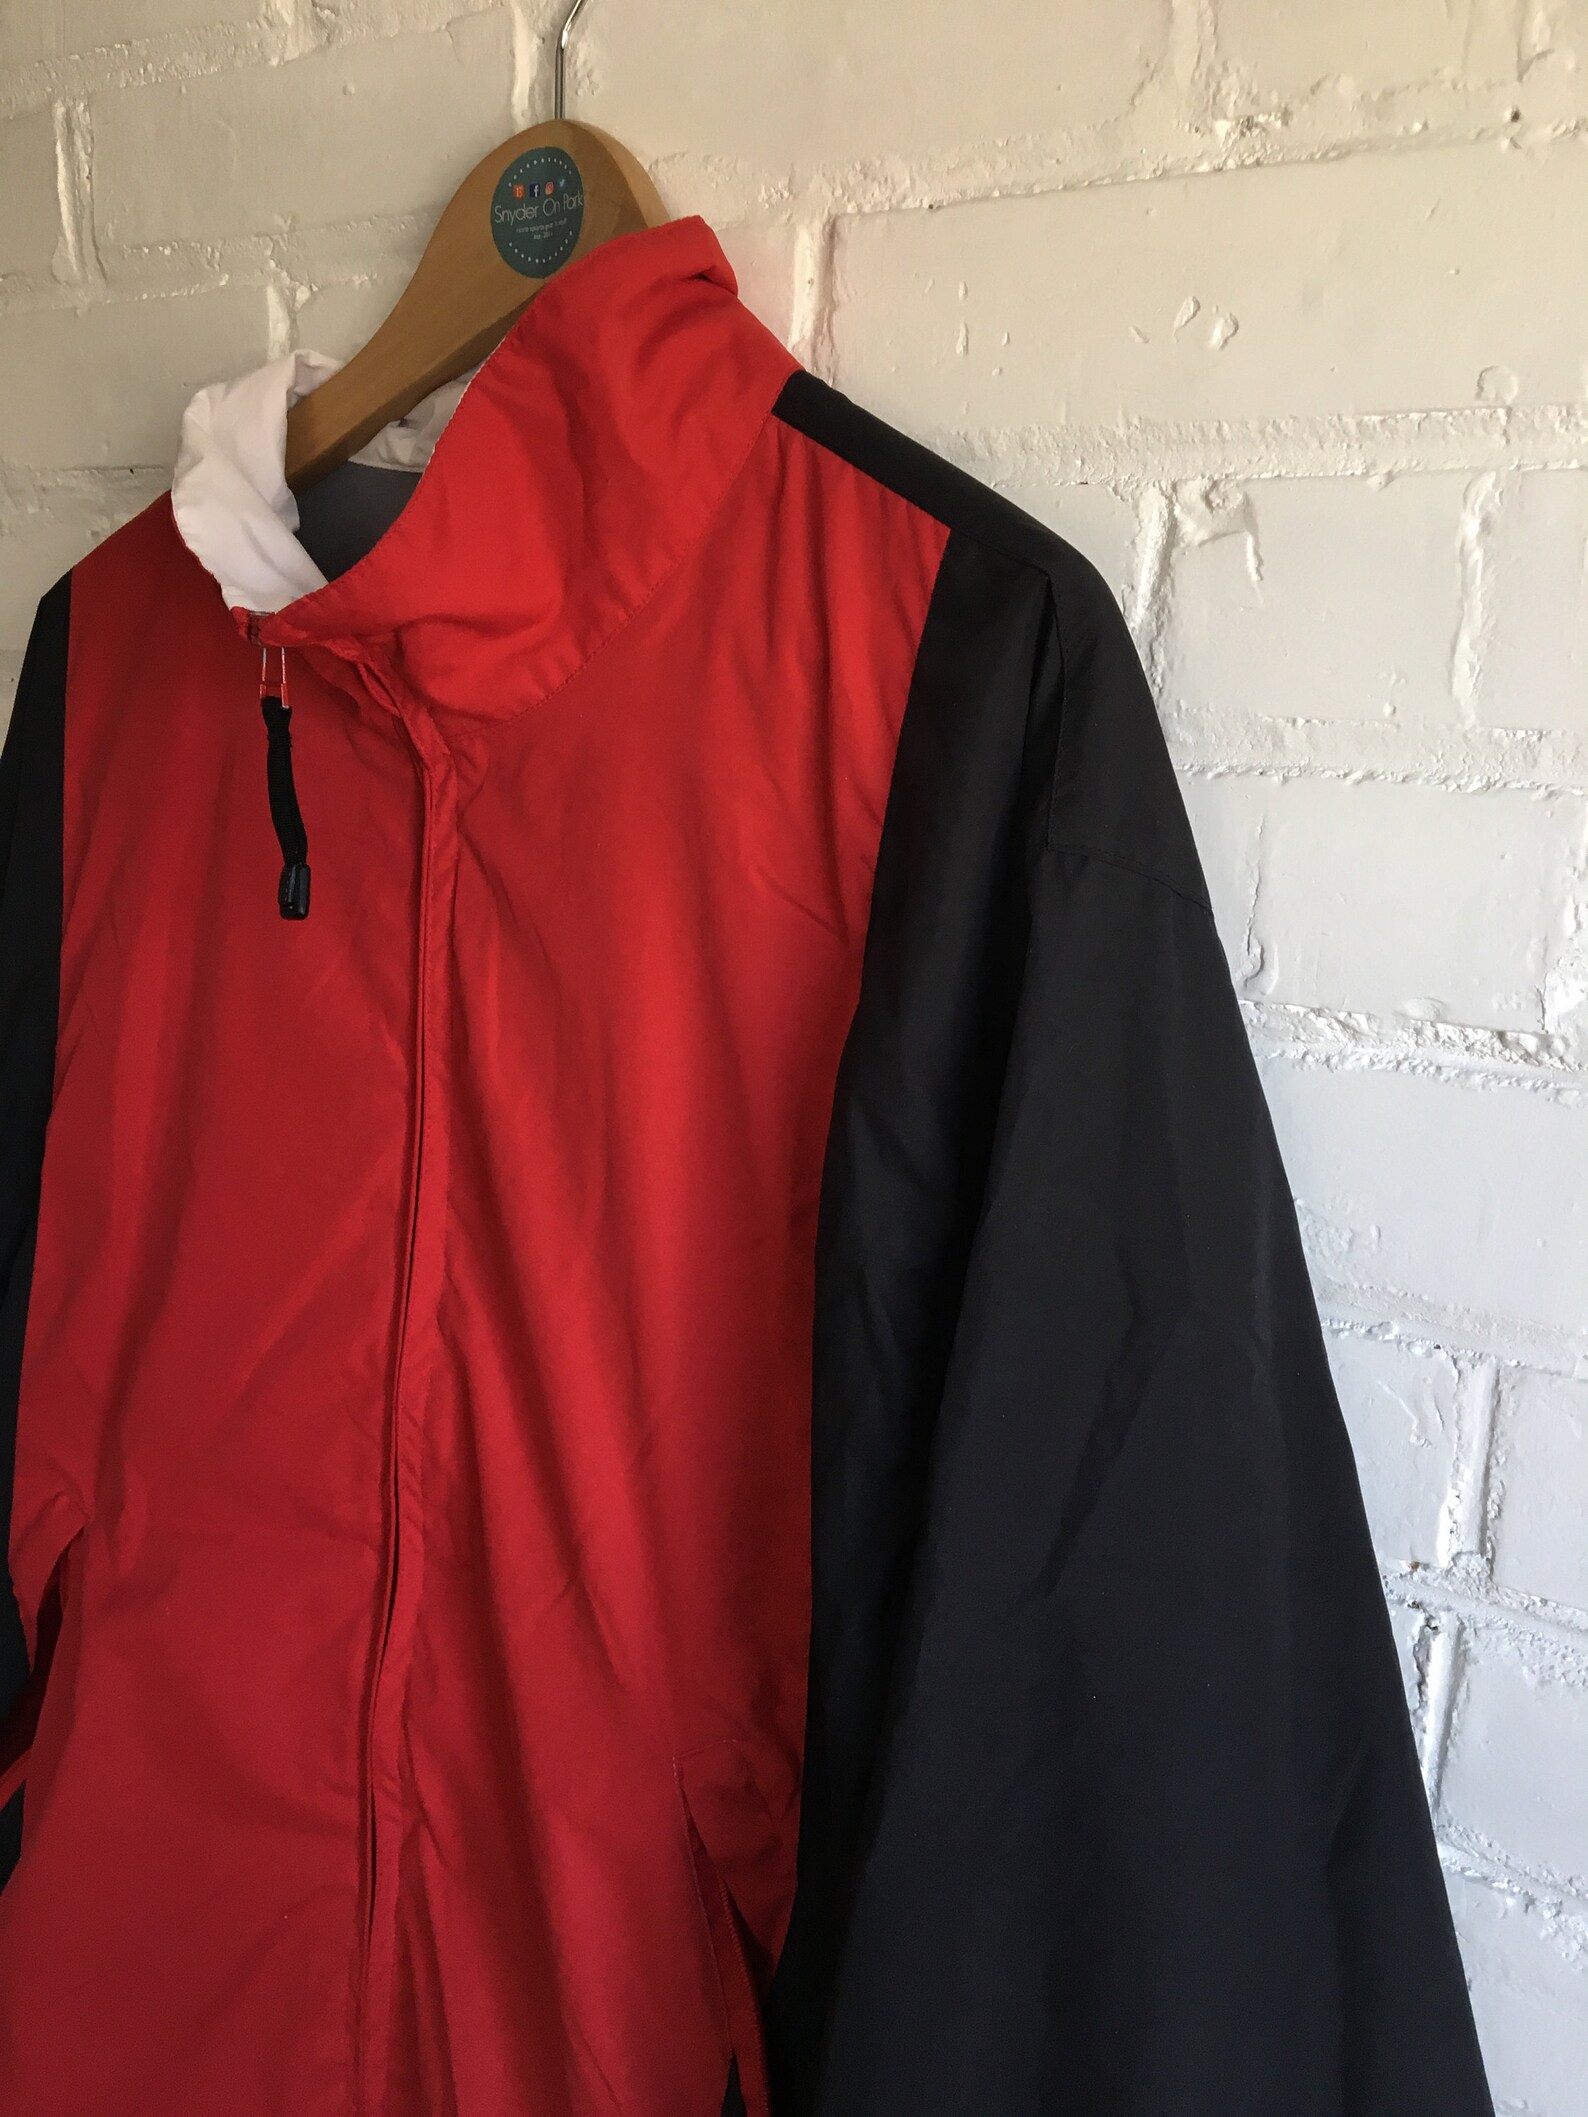 Nautica Competition Simple Black Red Windbreaker Jacket Coat - Etsy